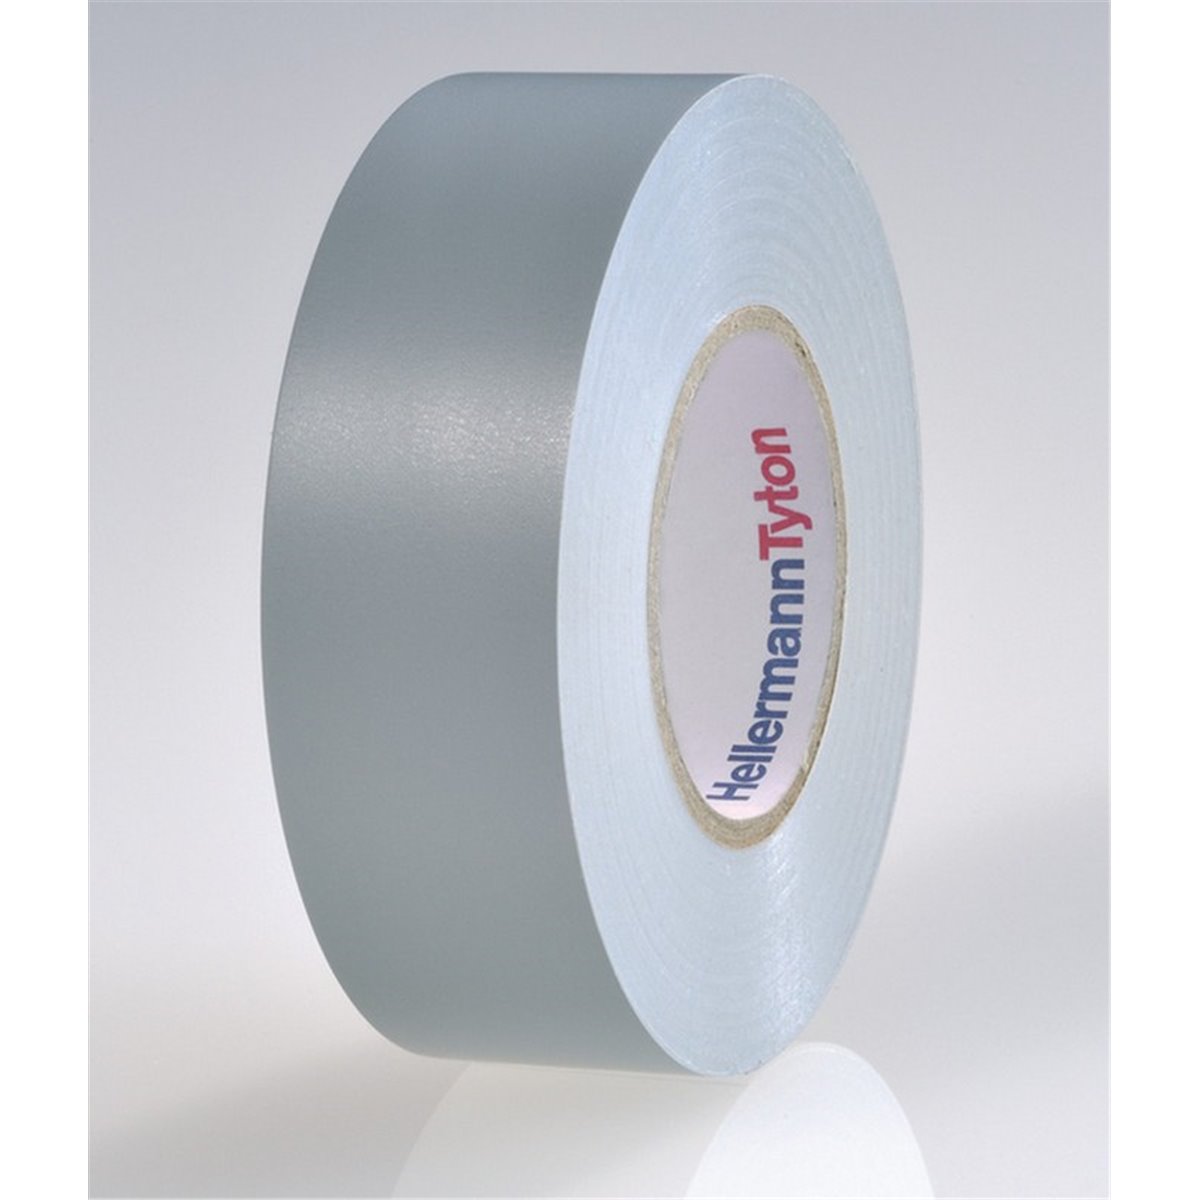 PVC Electrical insulation tape HTAPE-FLEX15-19x20-PVC-GY HellermannTyton